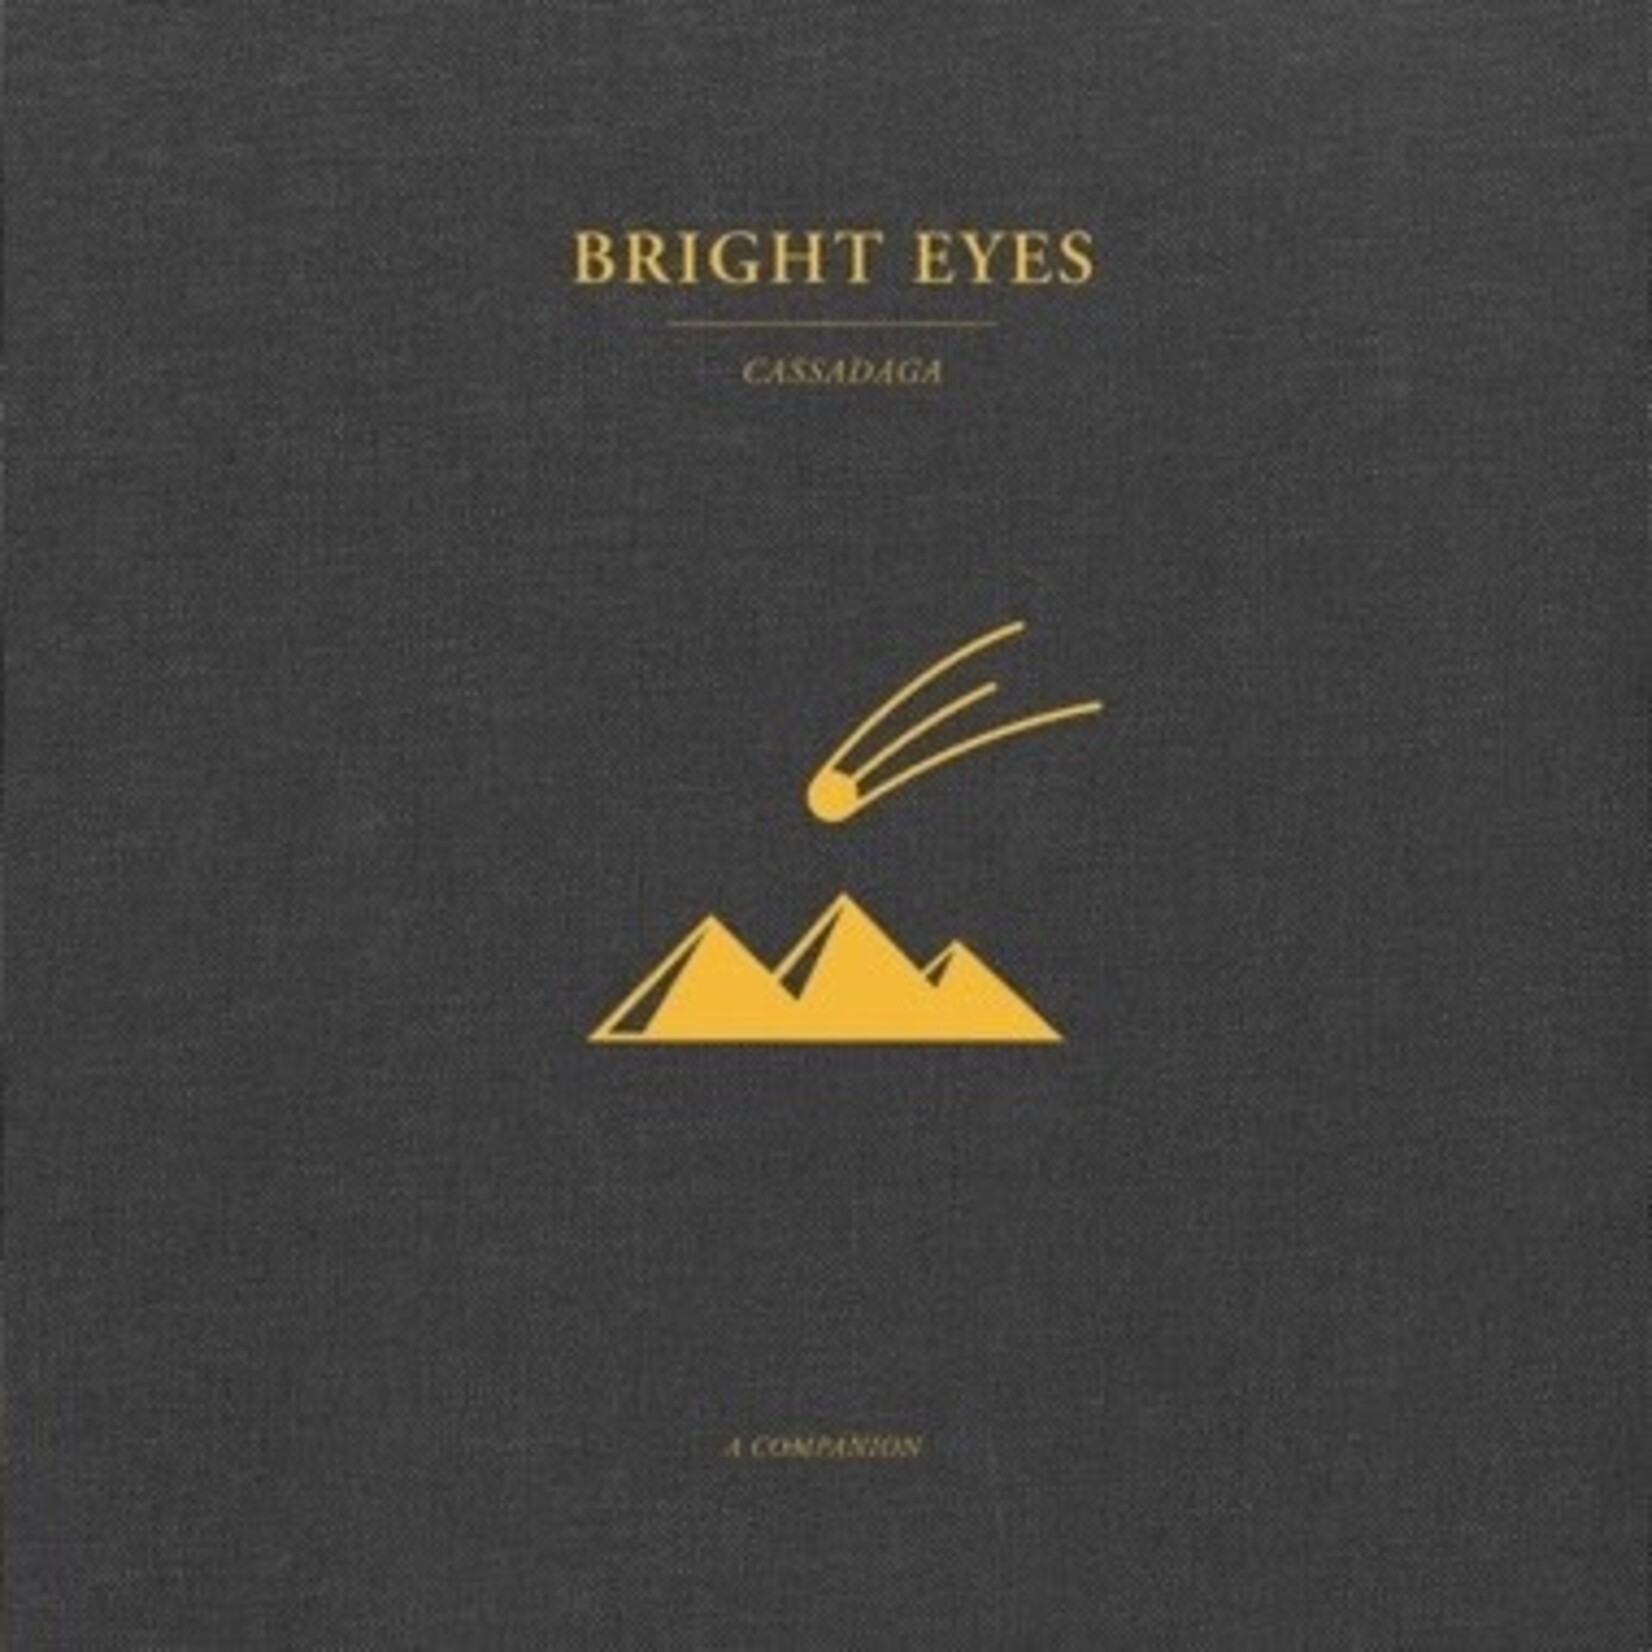 Dead Oceans Bright Eyes - Cassadaga: A Companion (12") [Gold]